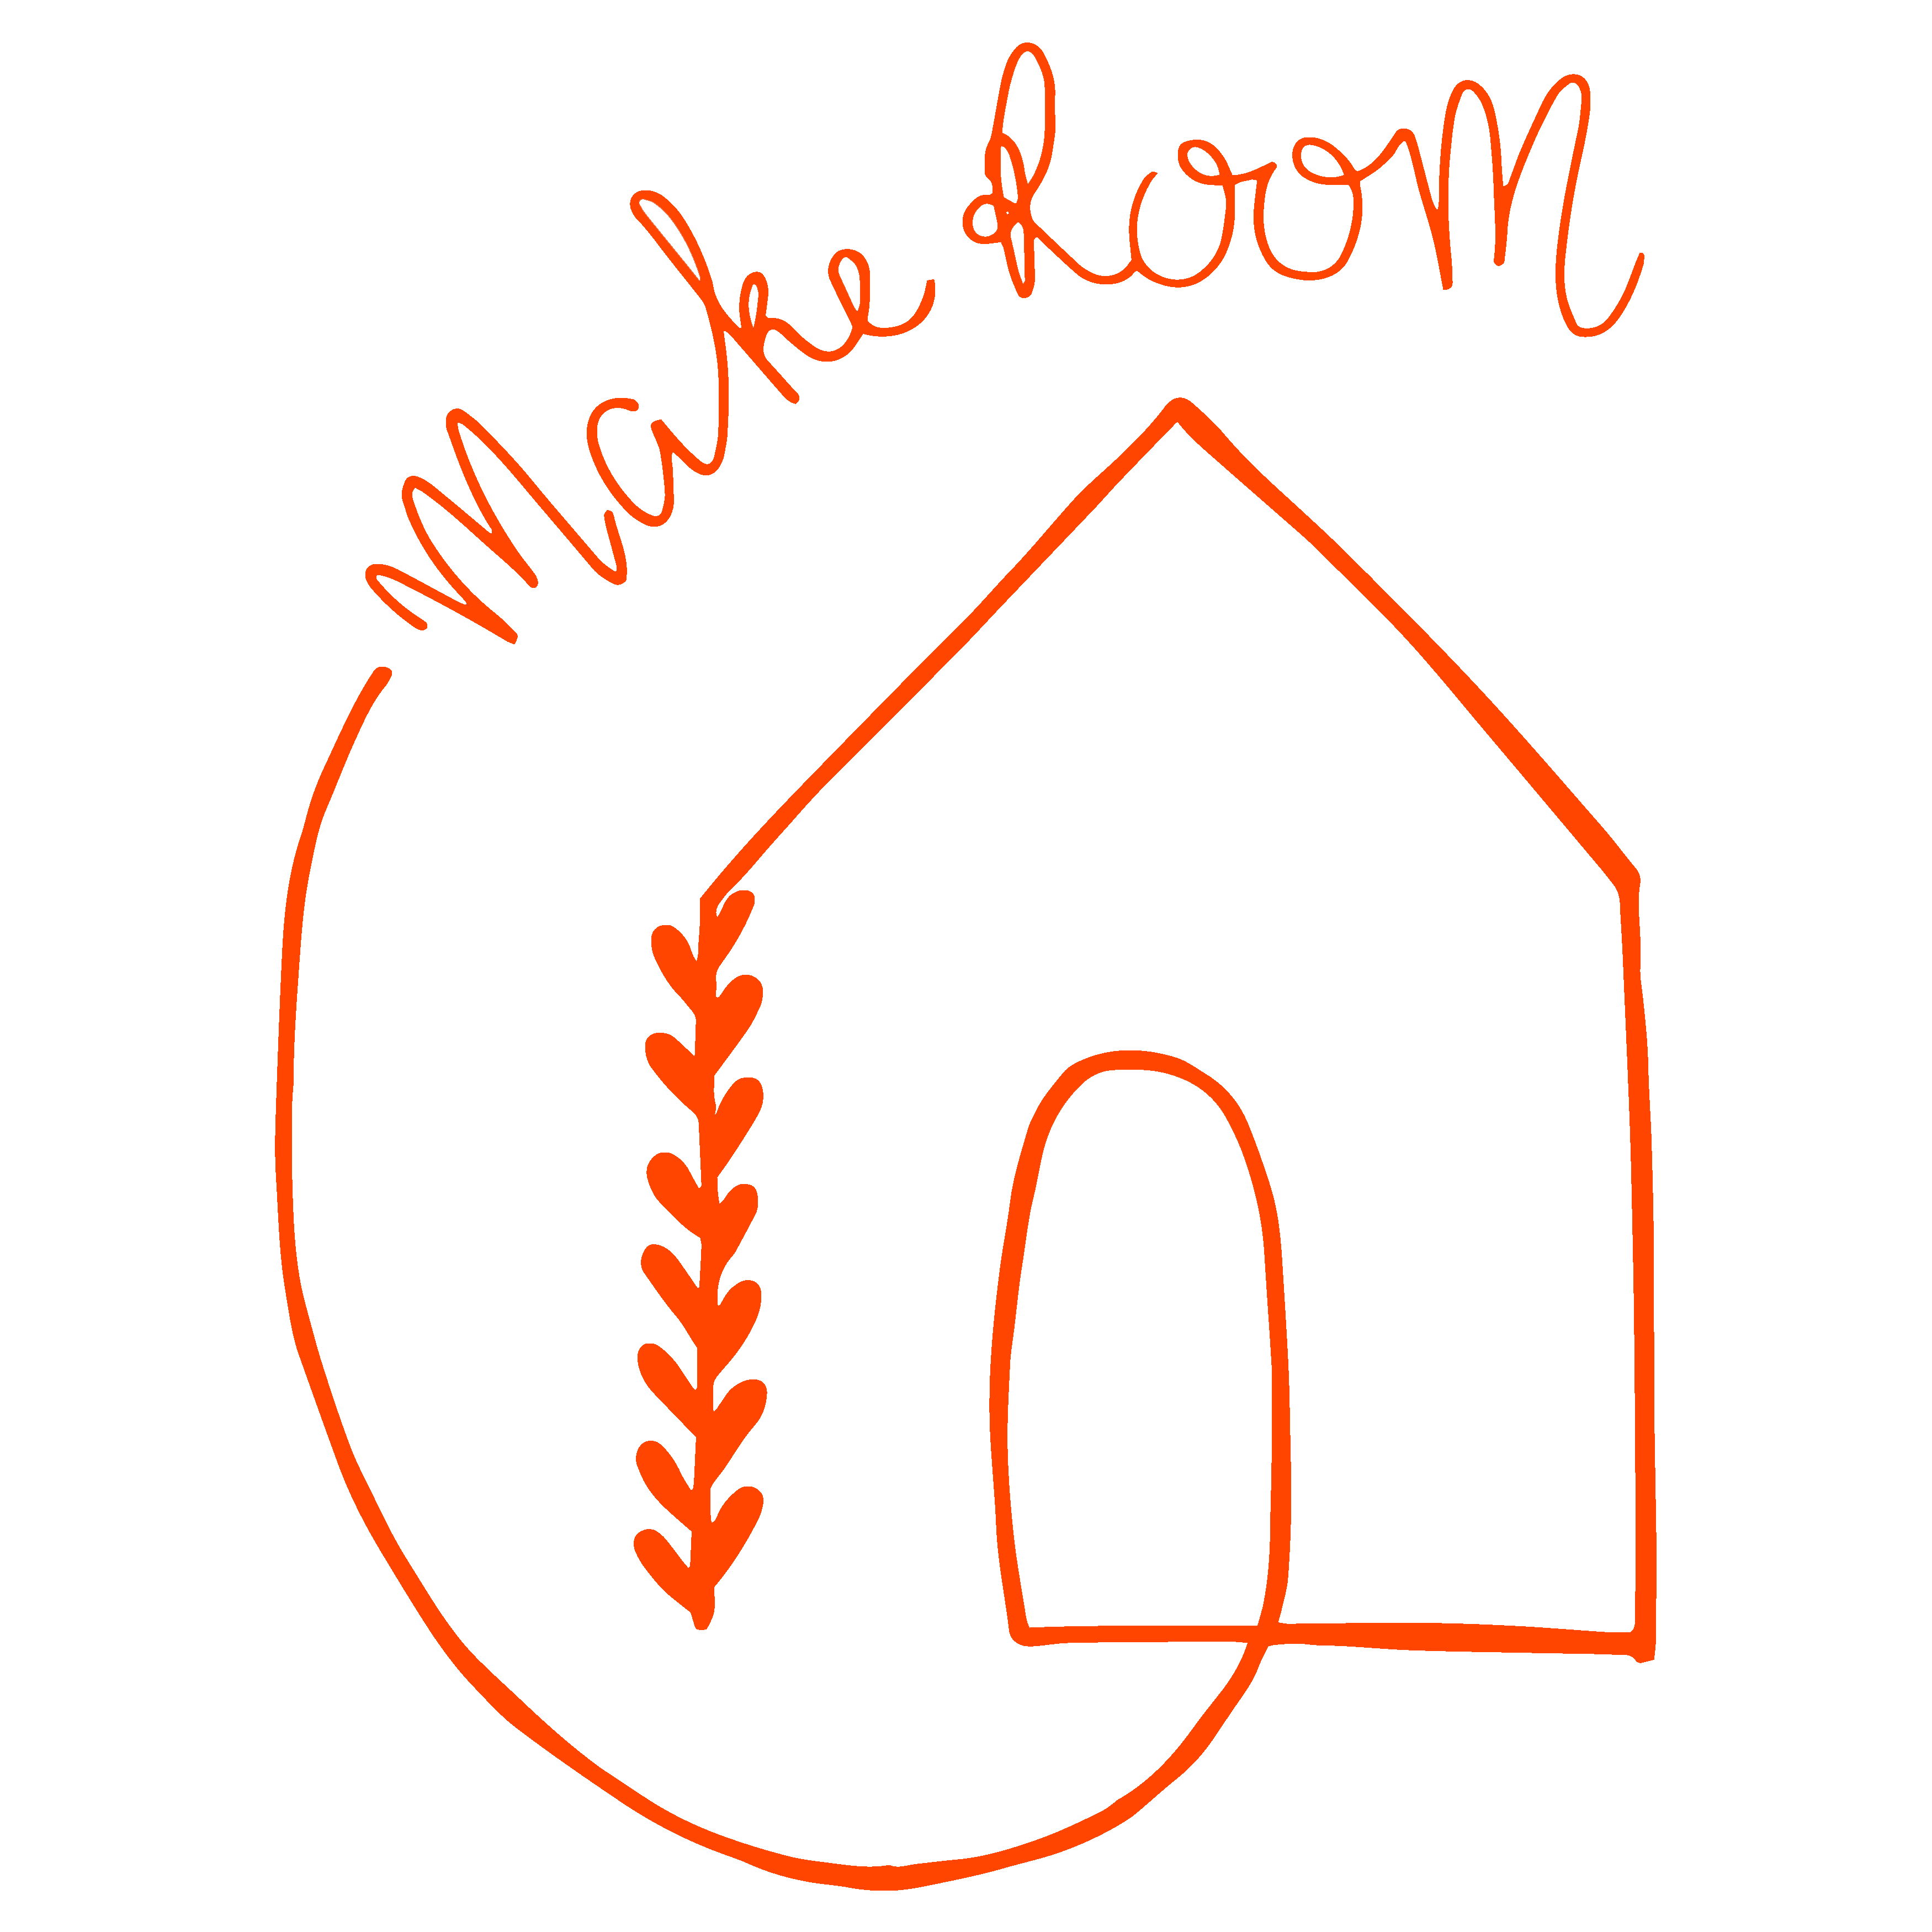 Make Room (designshop + woonwinkel + cadeaushop + blog + vintage + conceptstore Dordrecht)